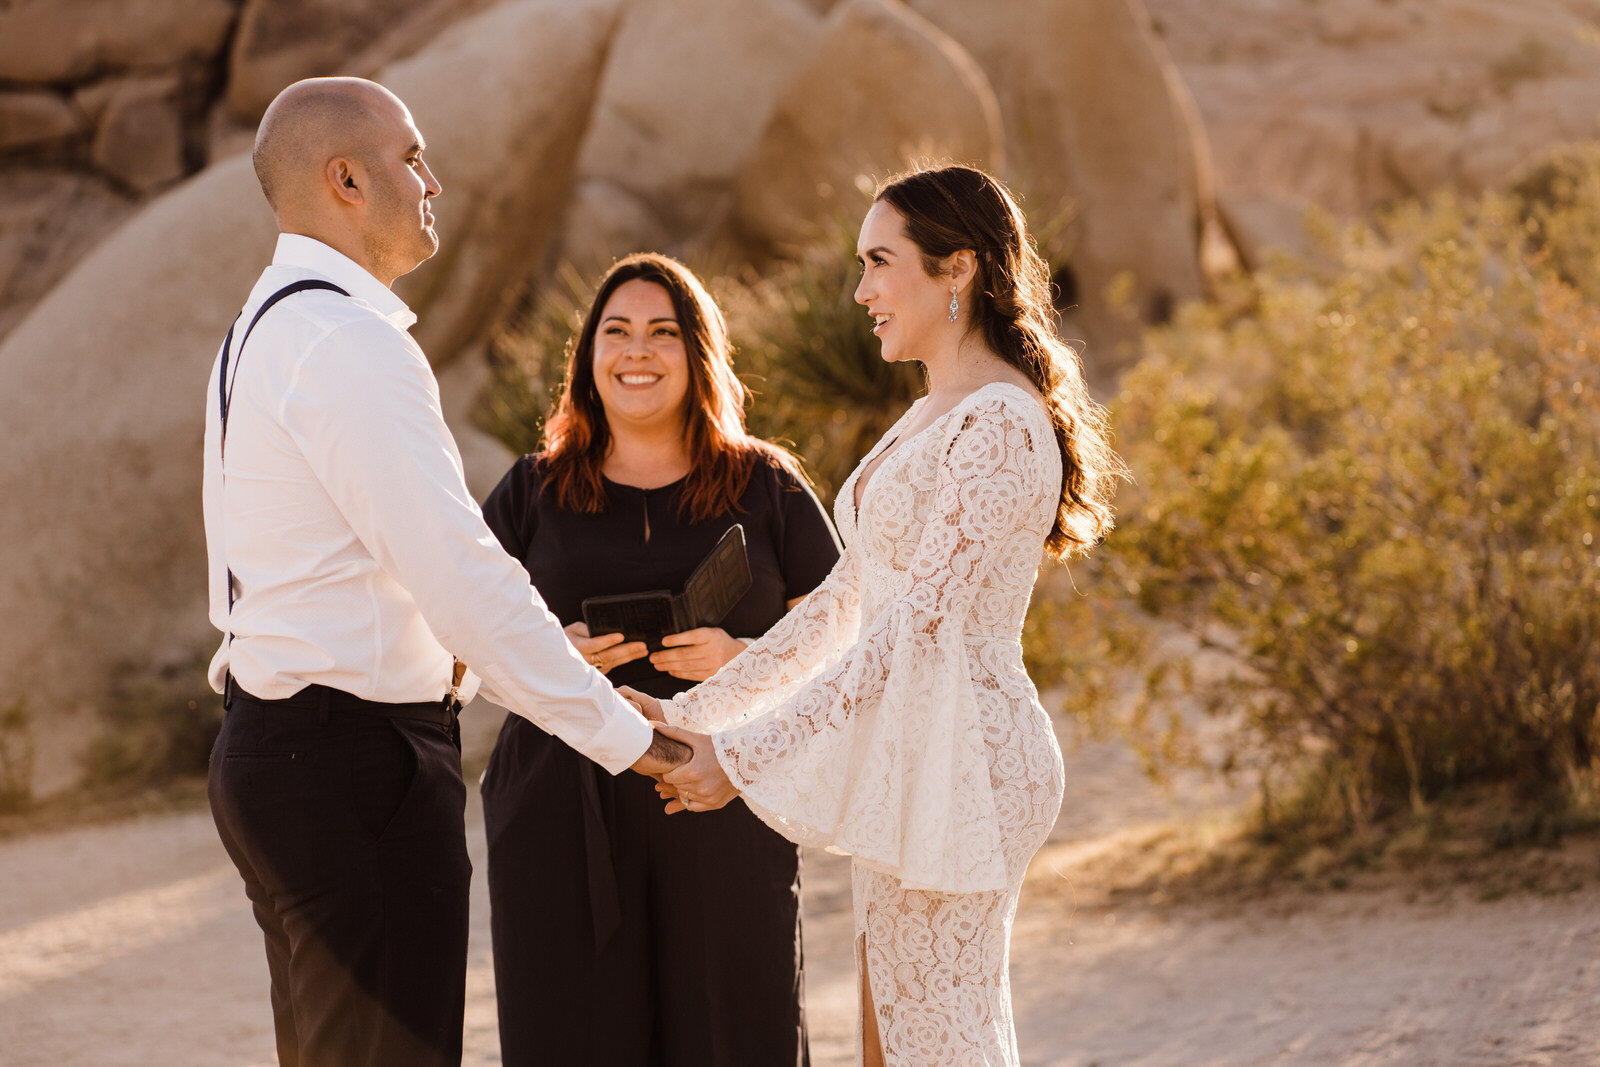 Desert Wedding Photographer | Las Vegas Wedding Photographer | Boho Wedding Inspo | Joshua Tree National Park Wedding | Joshua Tree Wedding Photographer | Kept Record | www.keptrecord.com